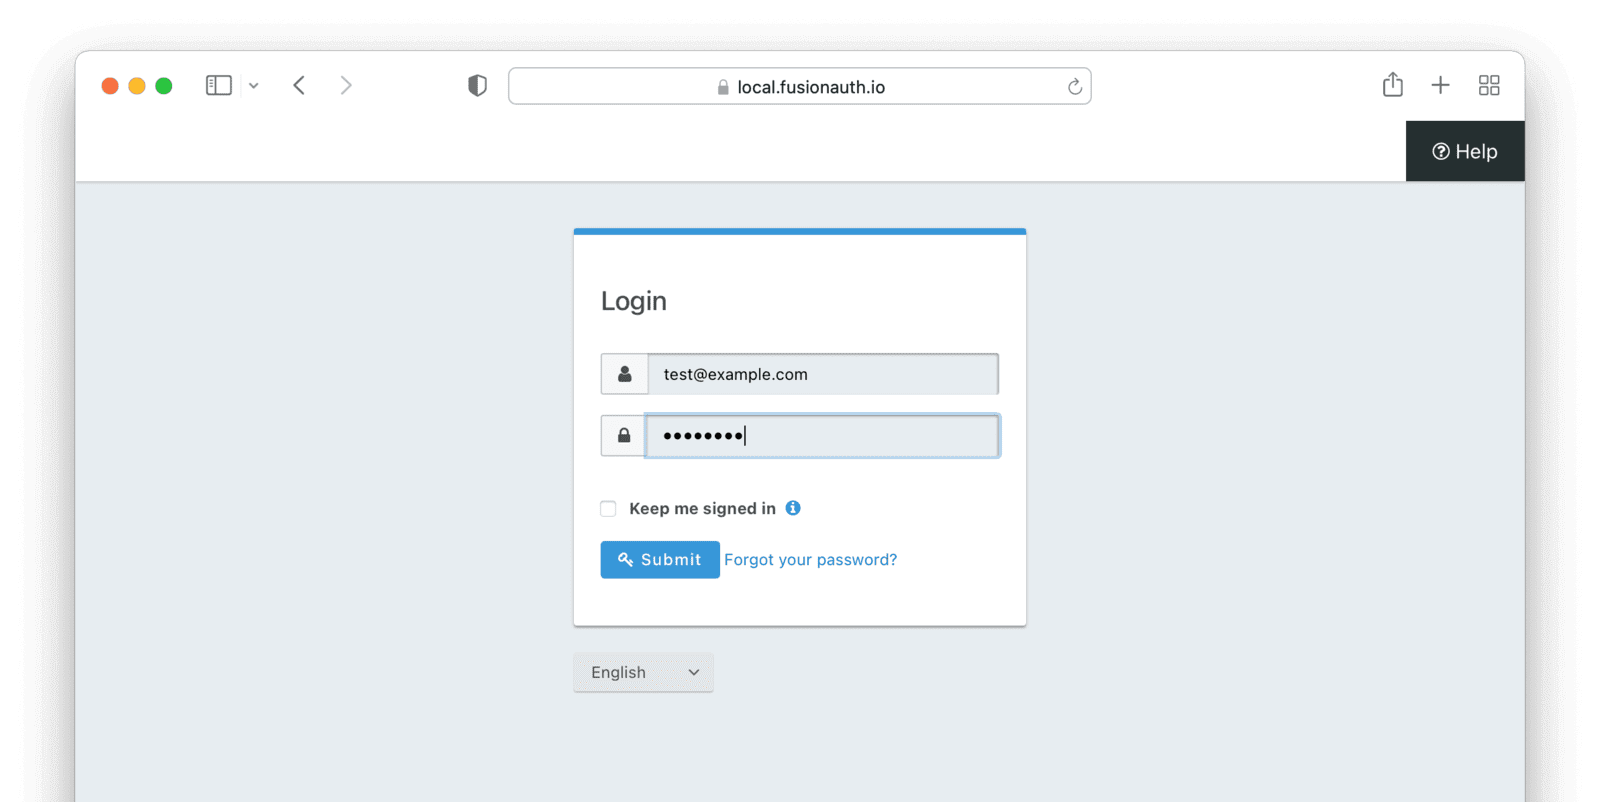 The user login screen.